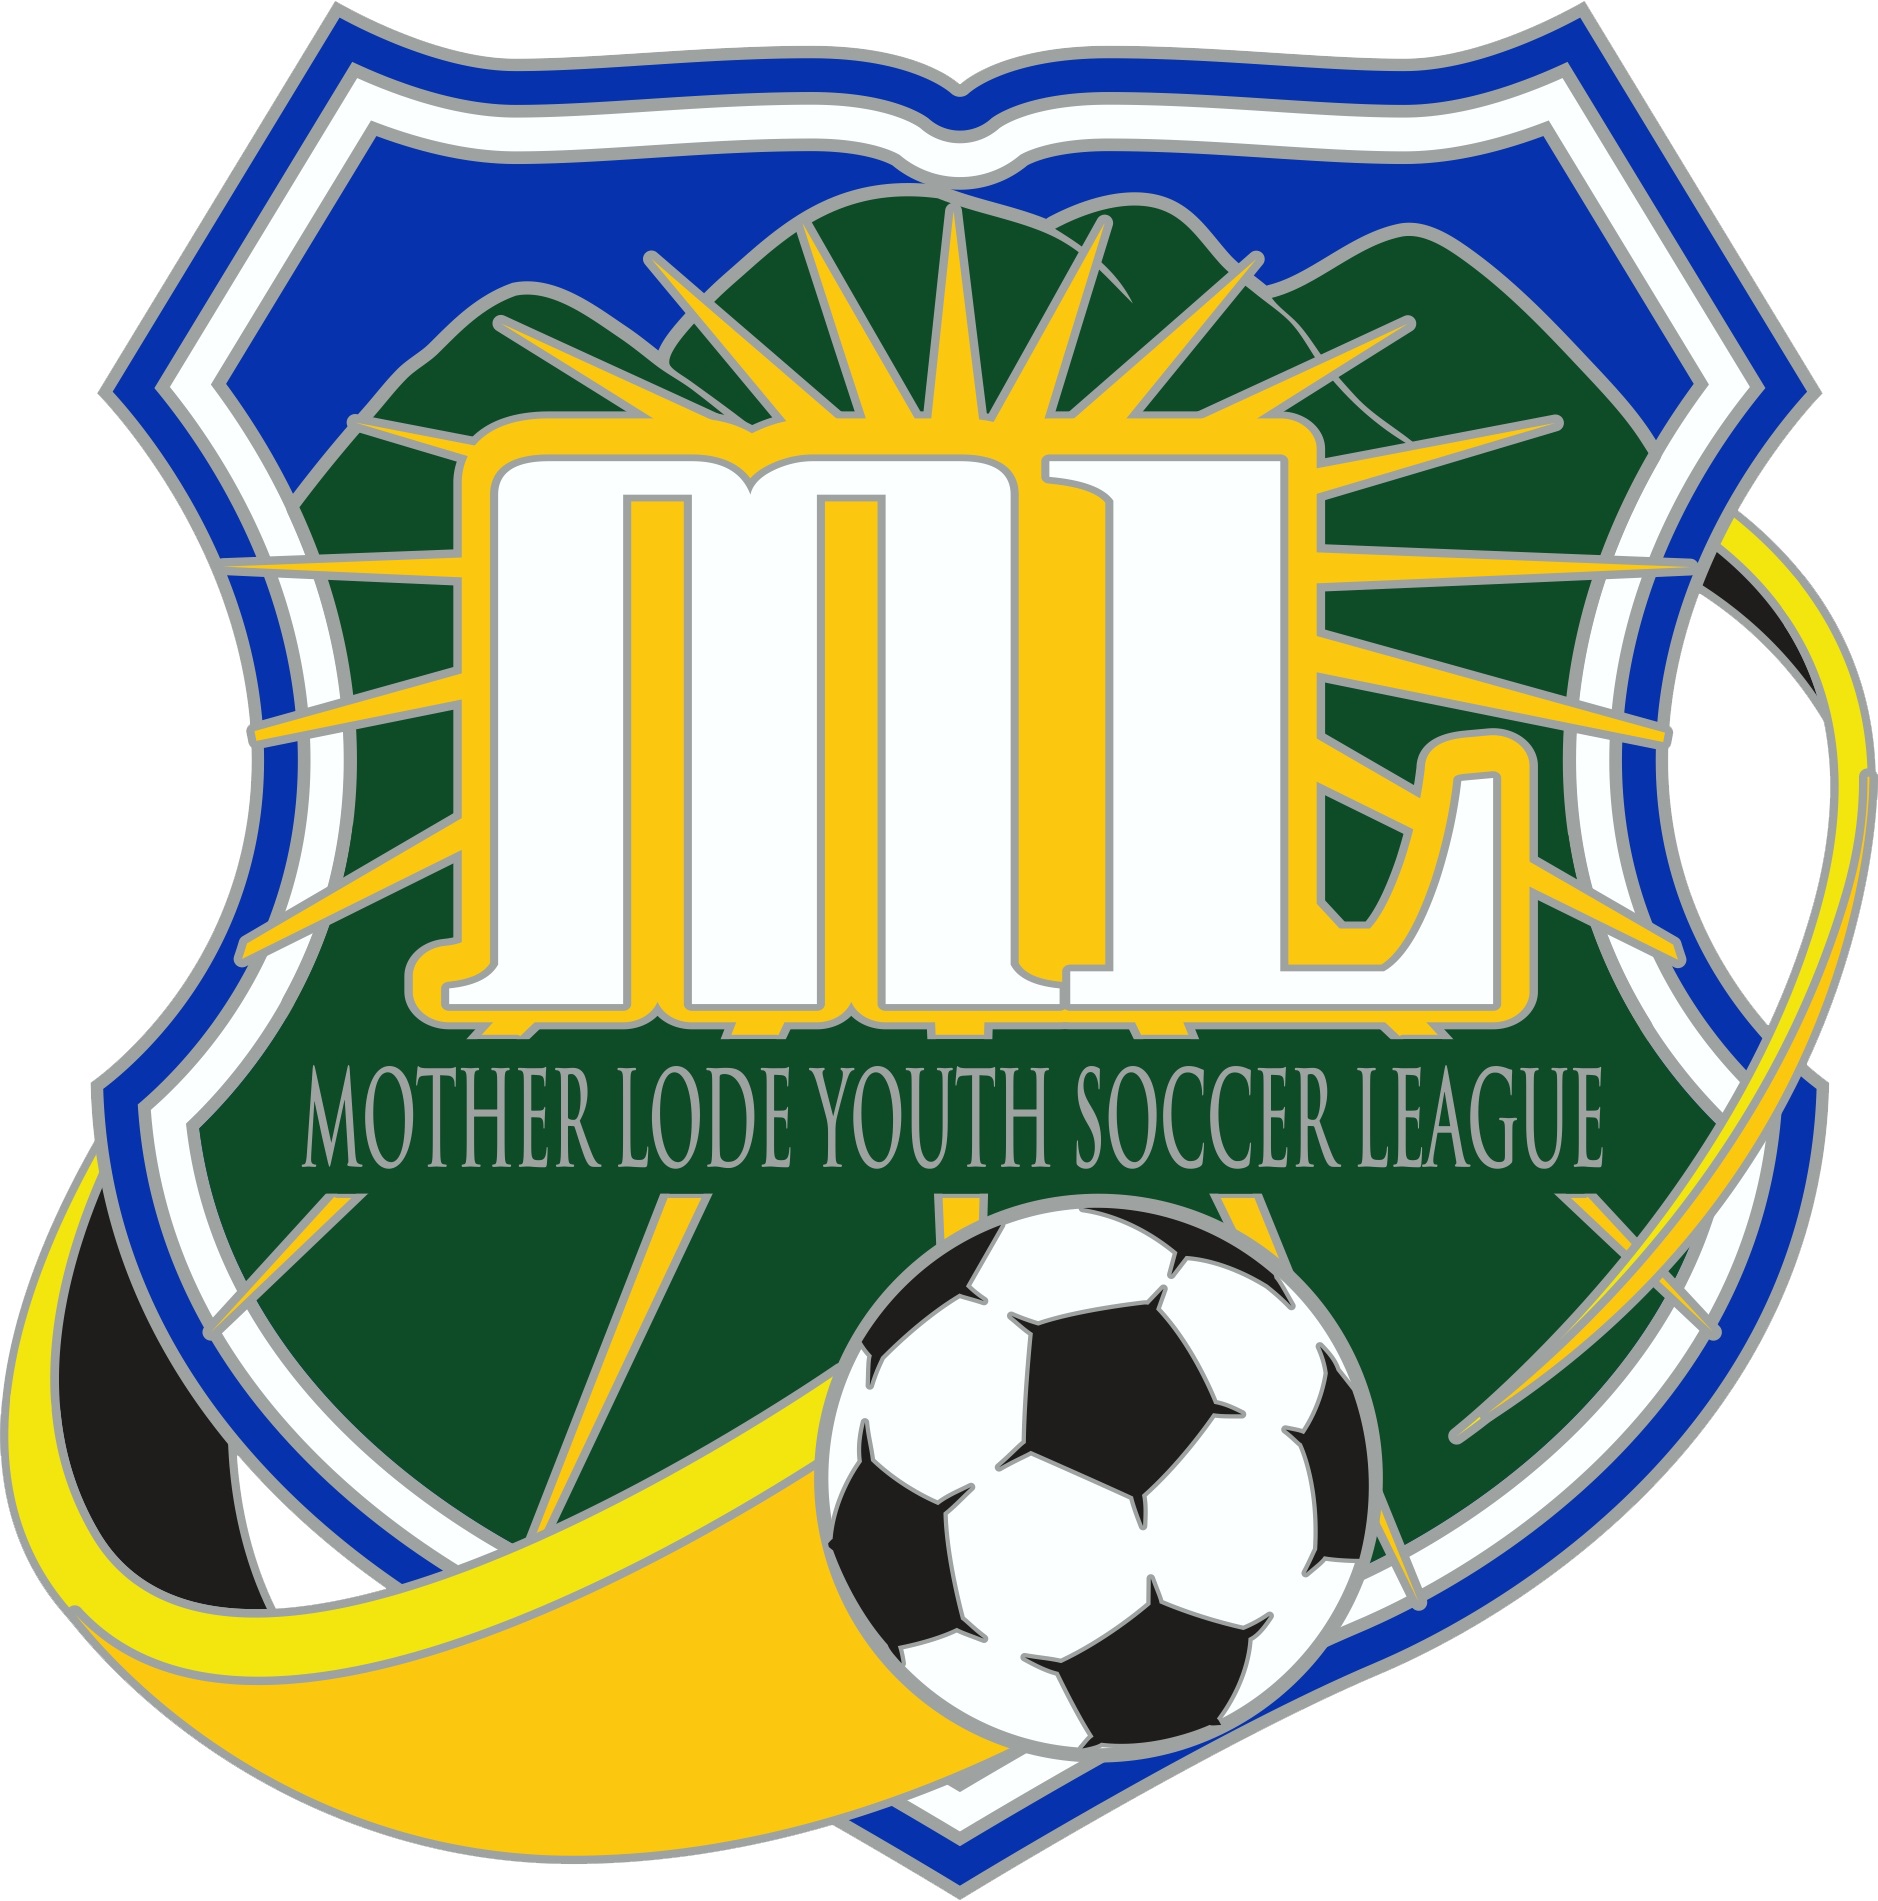 Mother Lode YSL team badge